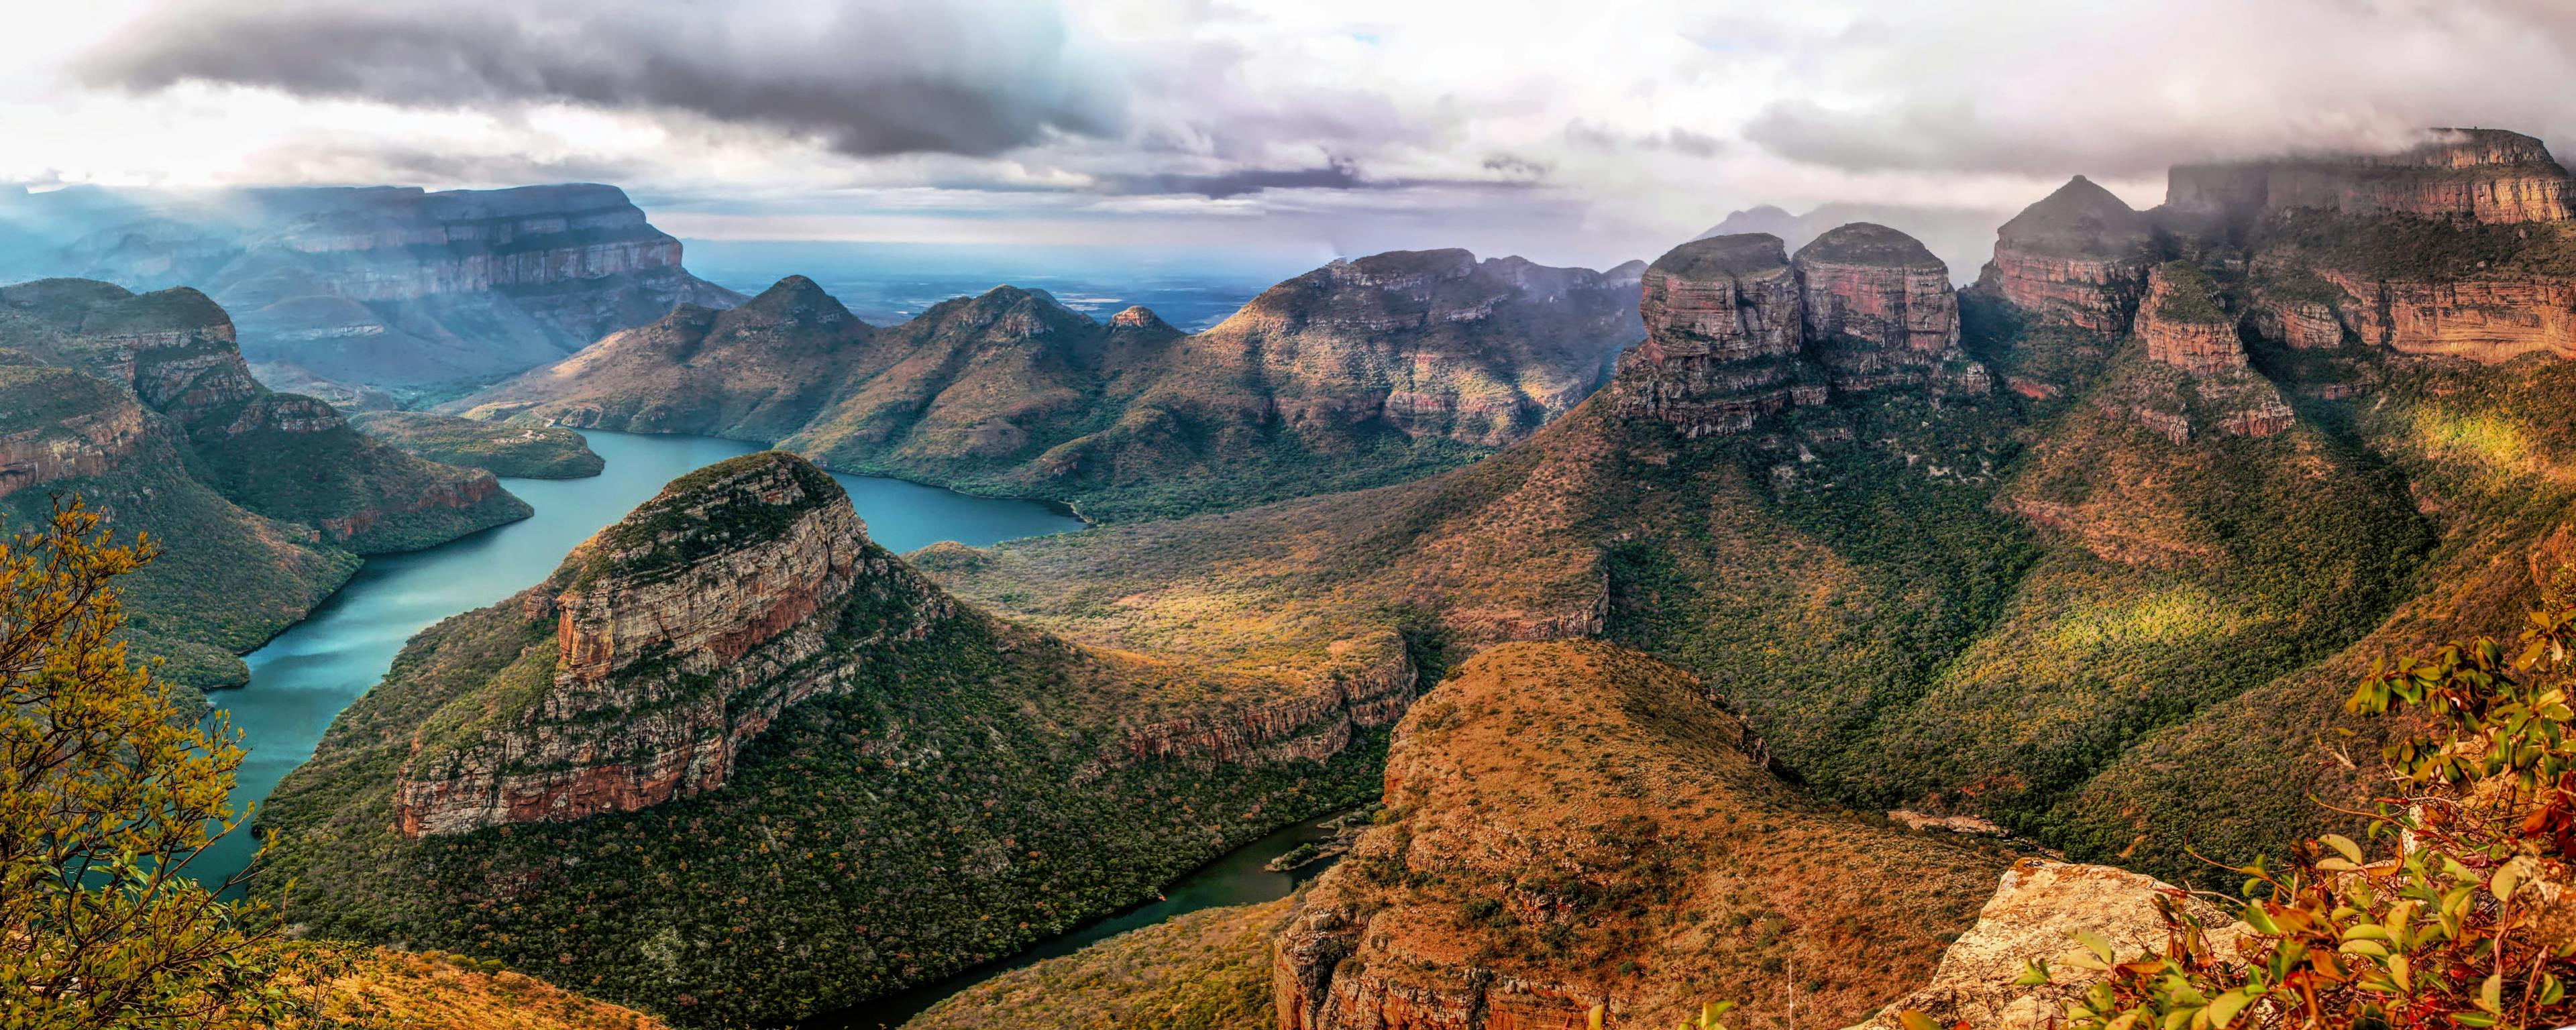 Blyde River Canyon, Mpumulanga, South Africa